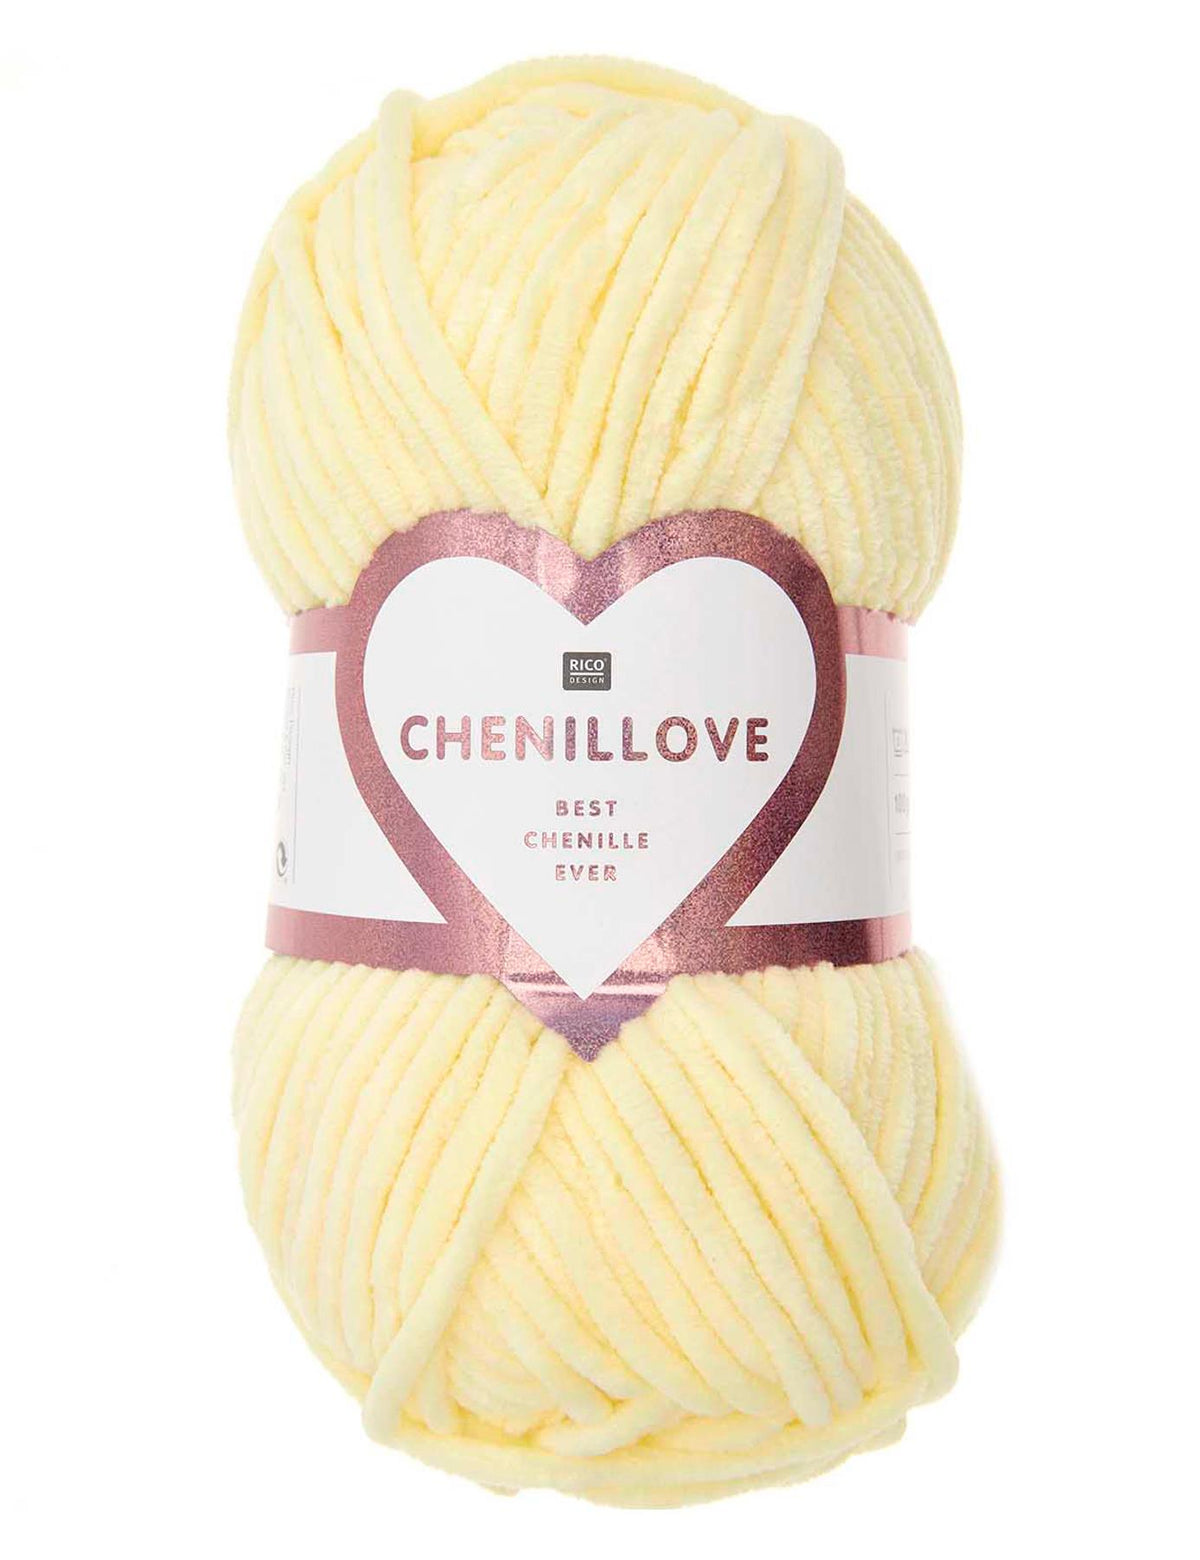 RICO Chenillove Vanilla (003) chenille yarn - 100g